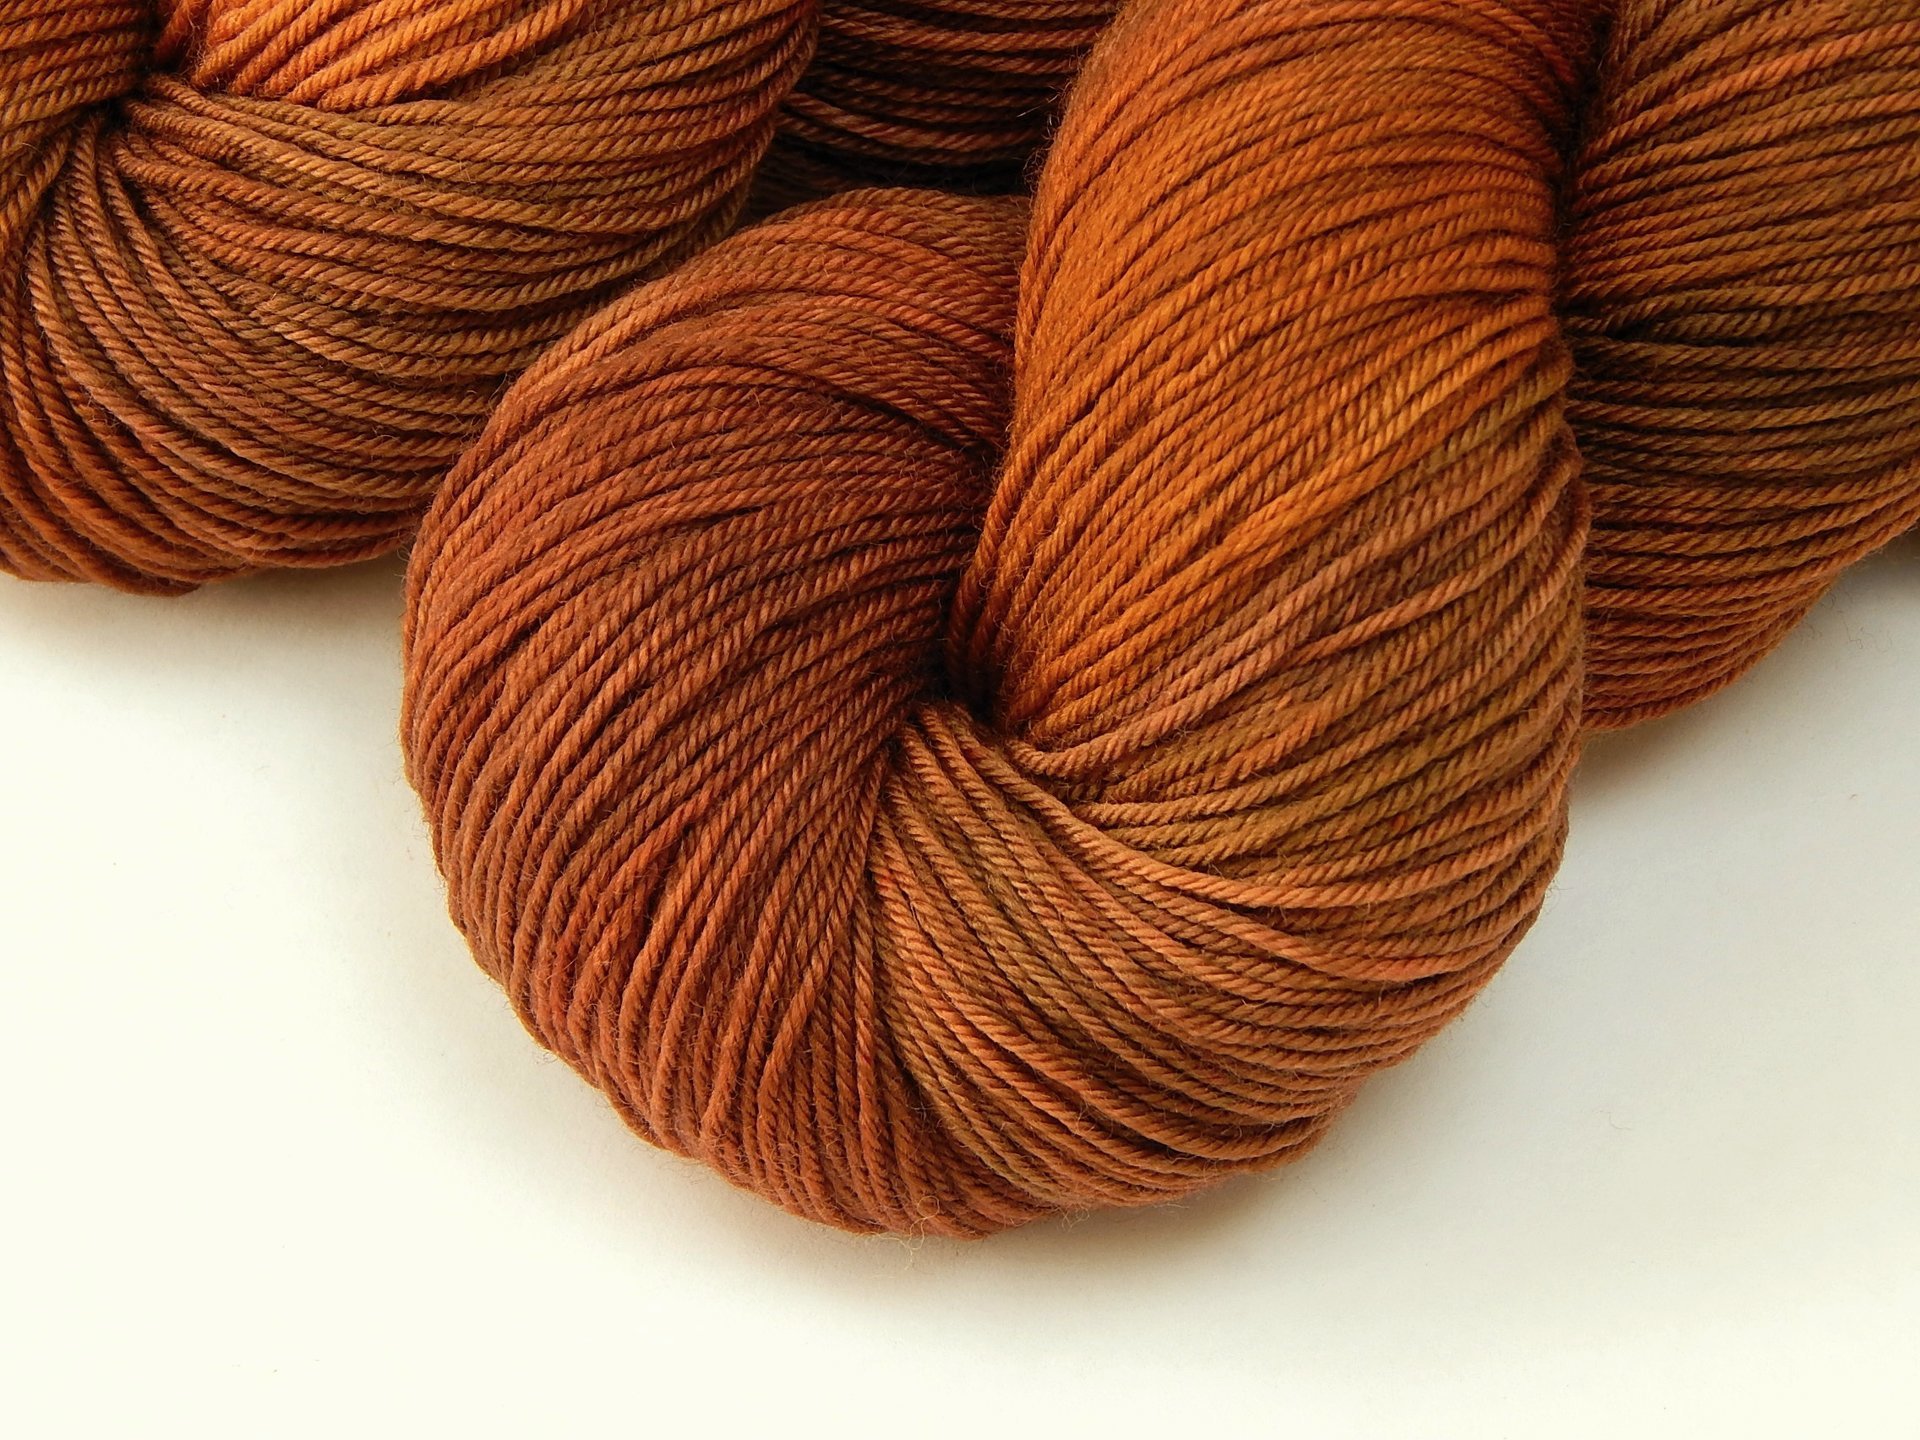 Hand Dyed Sock Yarn, Fingering Weight 4 Ply Superwash Merino Wool - Spice - Indie Knitting Yarn, Rust Burnt Orange Hand Dyed Yarn, Autumn Colors